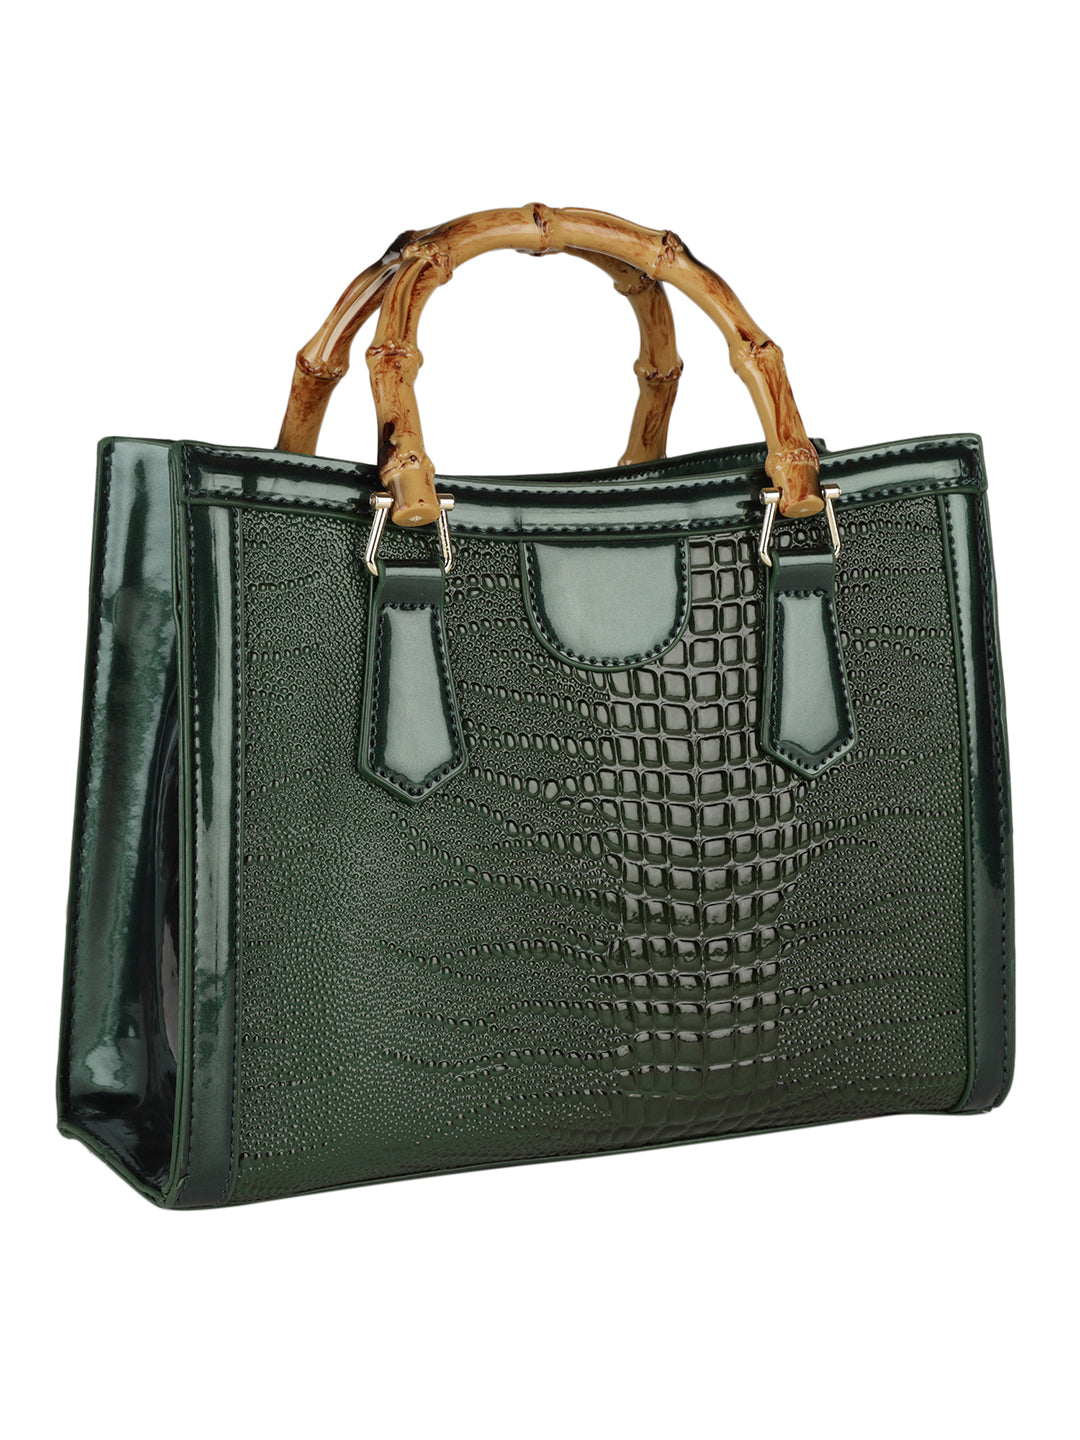 MINI WESST Women's Green Handheld Bag(MWHB118GR)